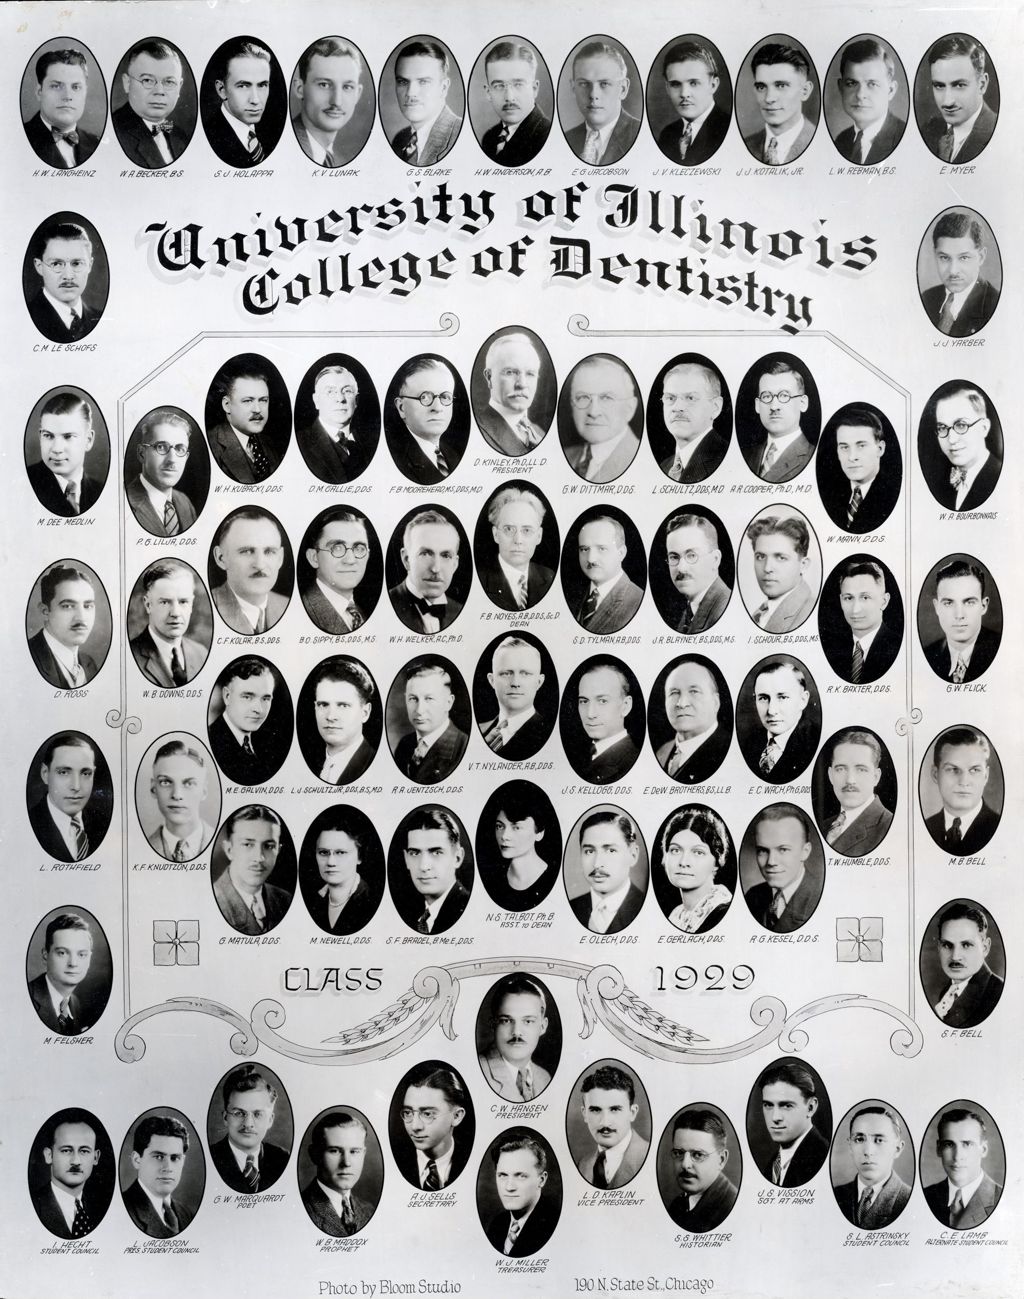 1929 graduating class, University of Illinois College of Dentistry